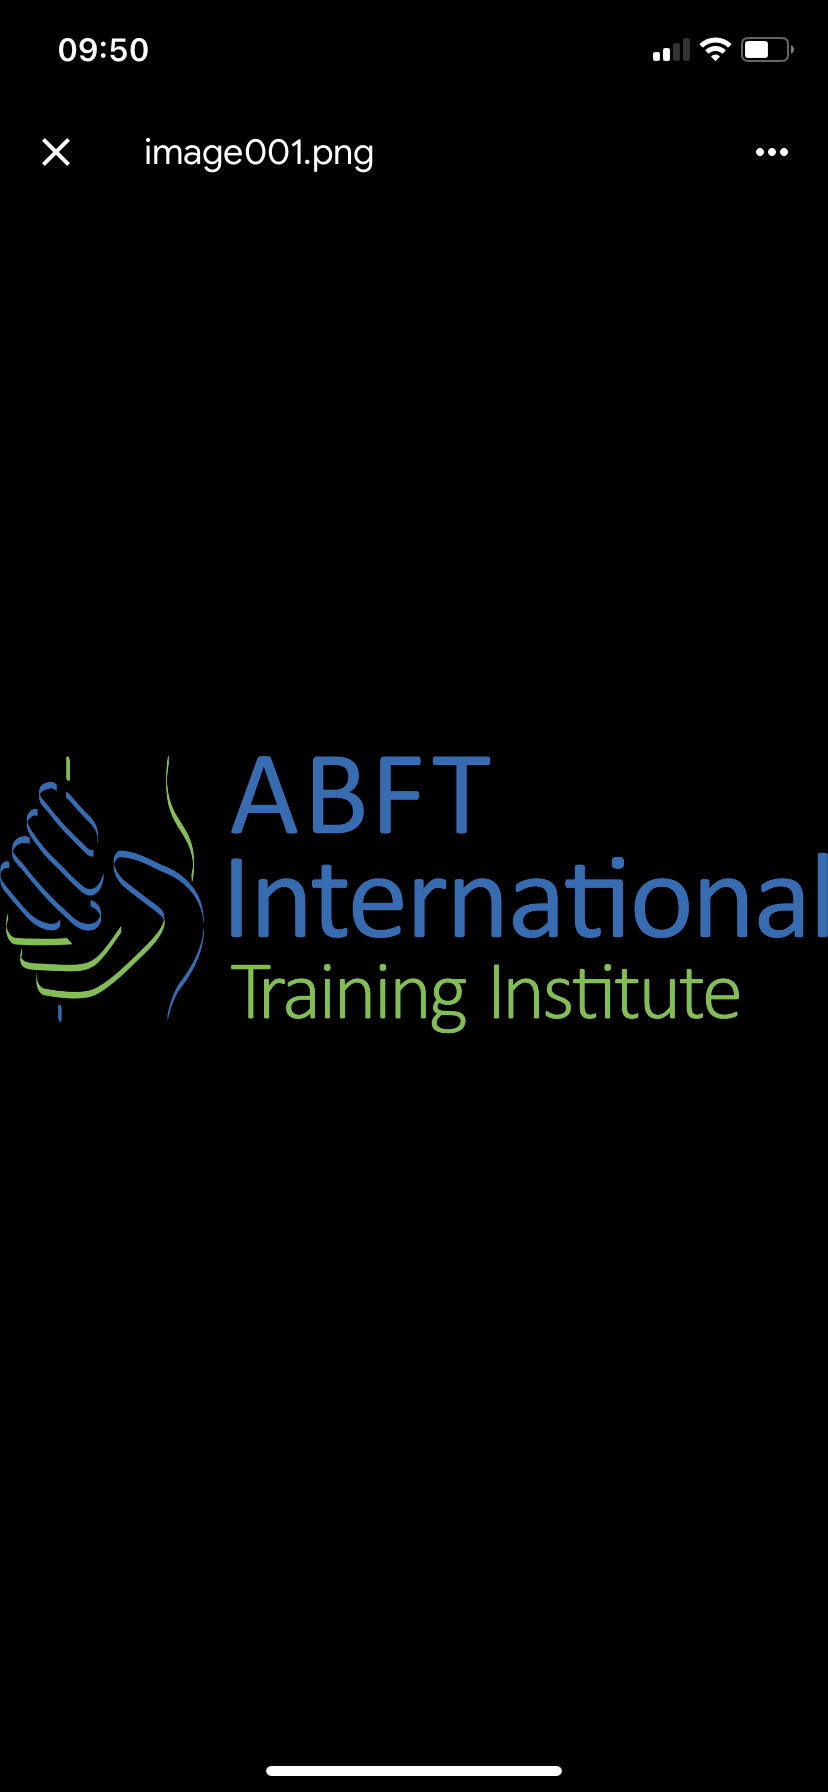 ABFT International Training Institute